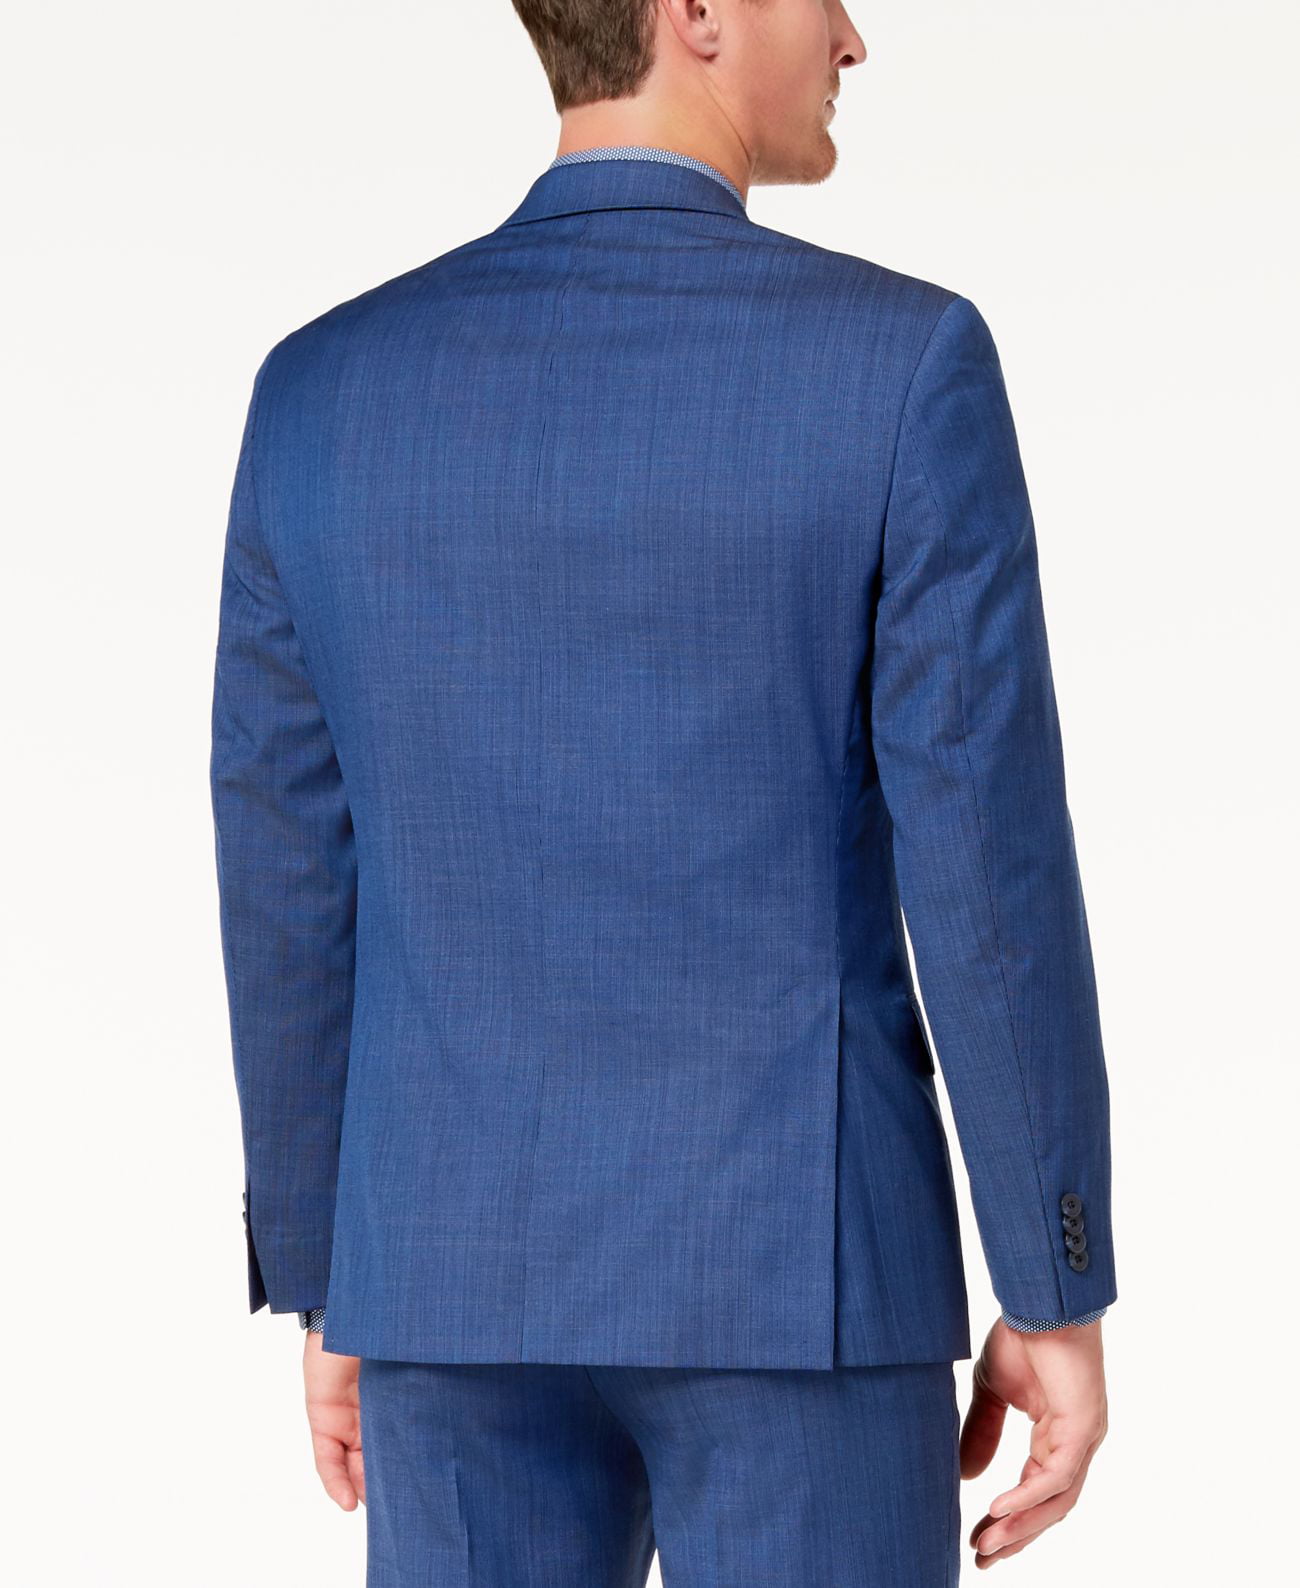 Michael Kors Men's Classic-Fit Airsoft Stretch Blue Solid Suit Jacket -  